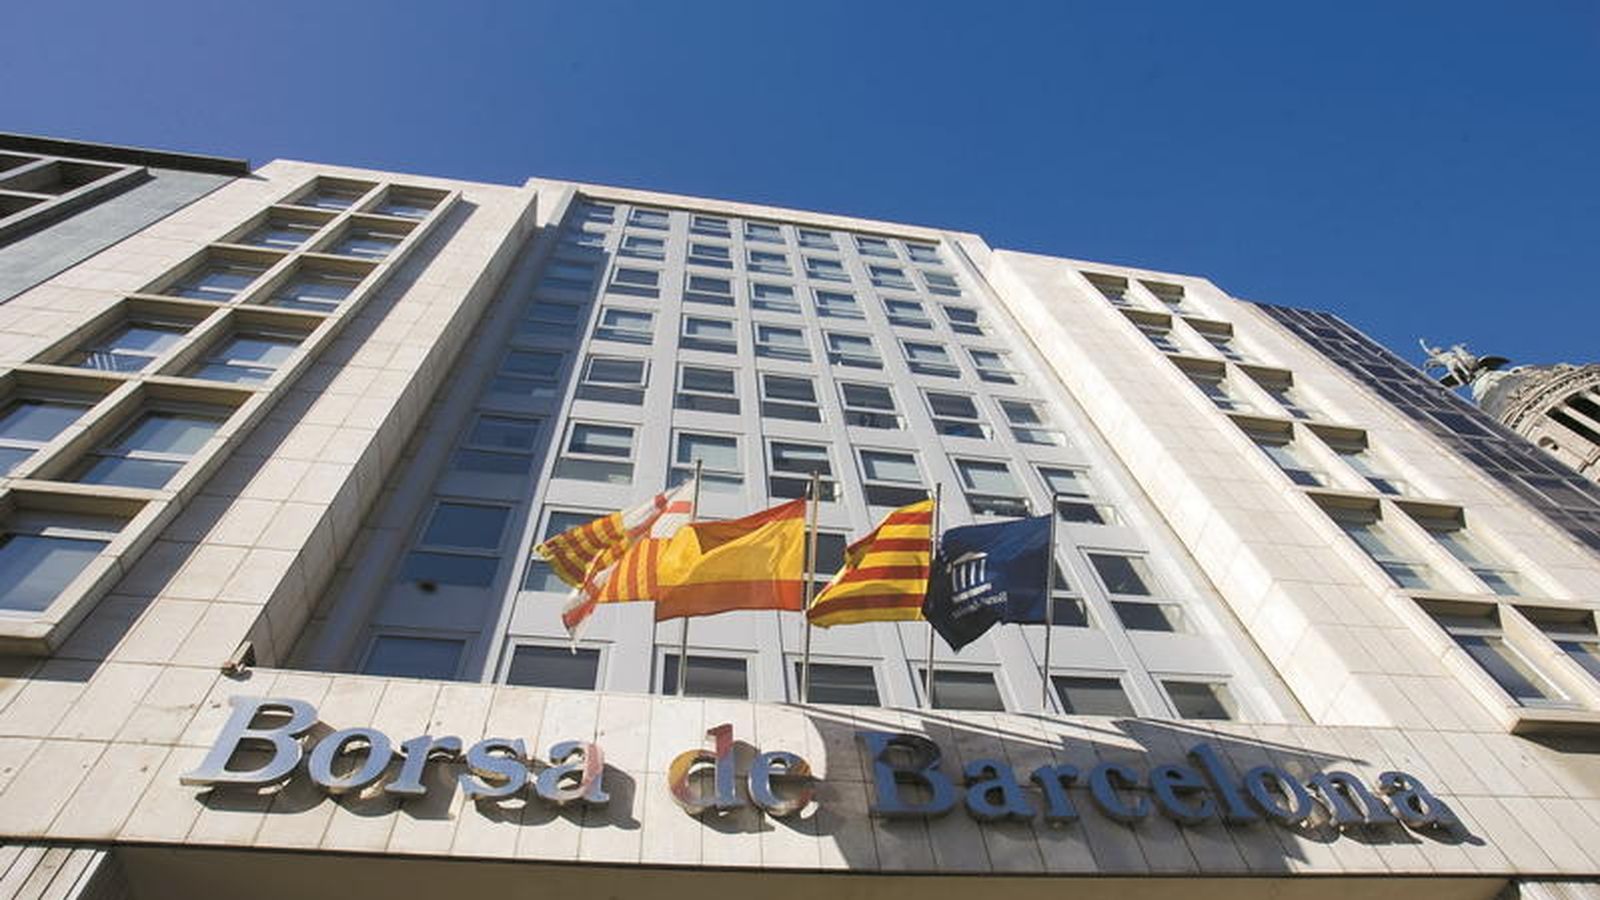 Foto: Fachada de la Bolsa de Barcelona (borsabcn.es)